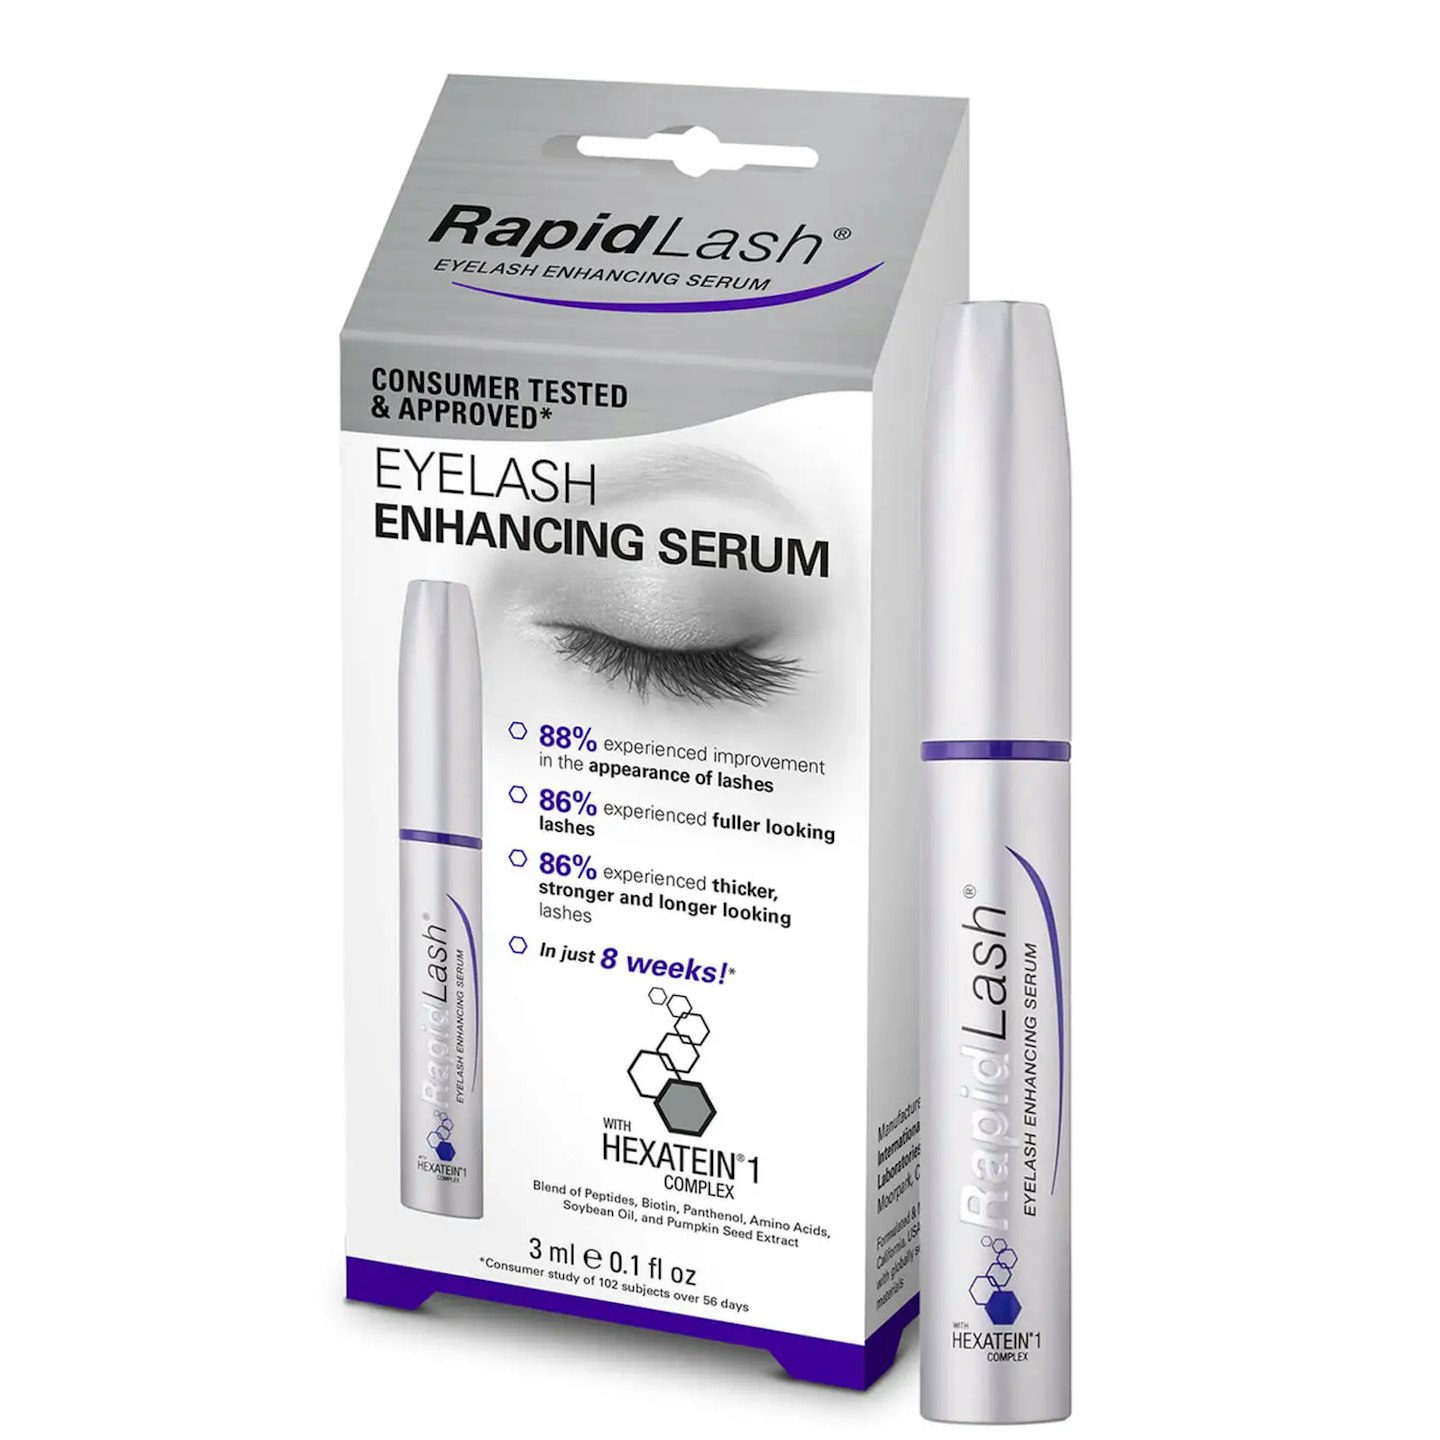 Rapid Lash Eyelash Enhancing Serum